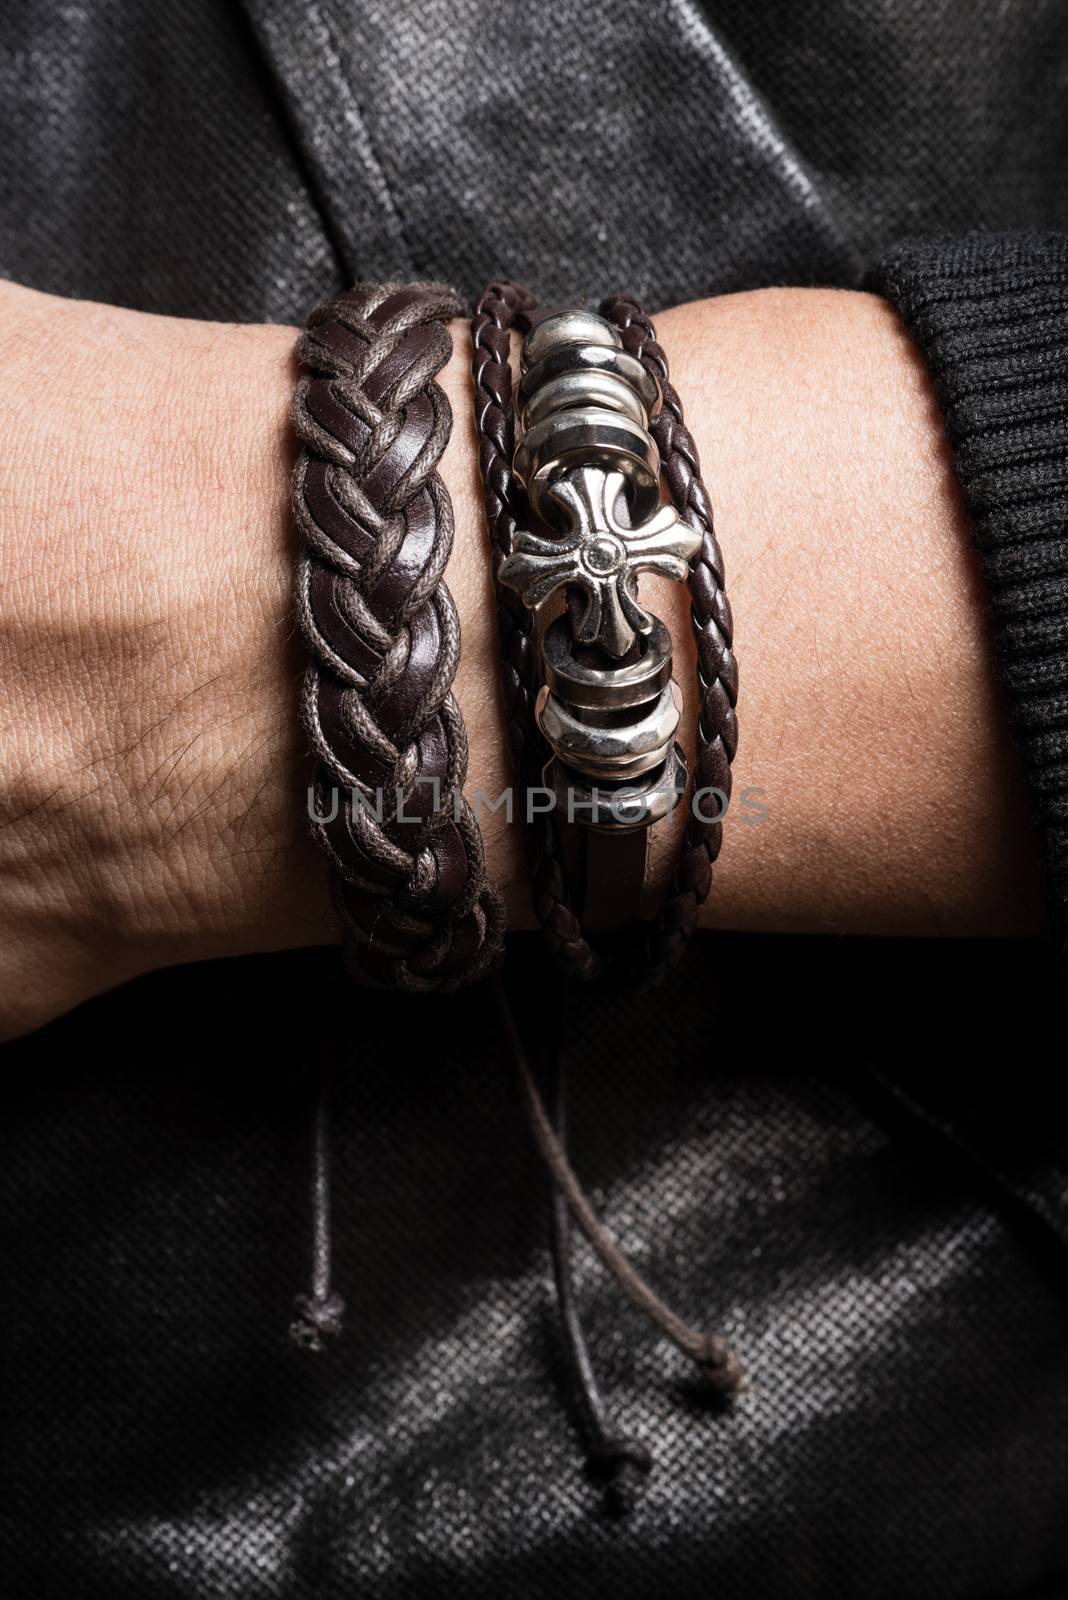 bracelet on the wrist by norgal